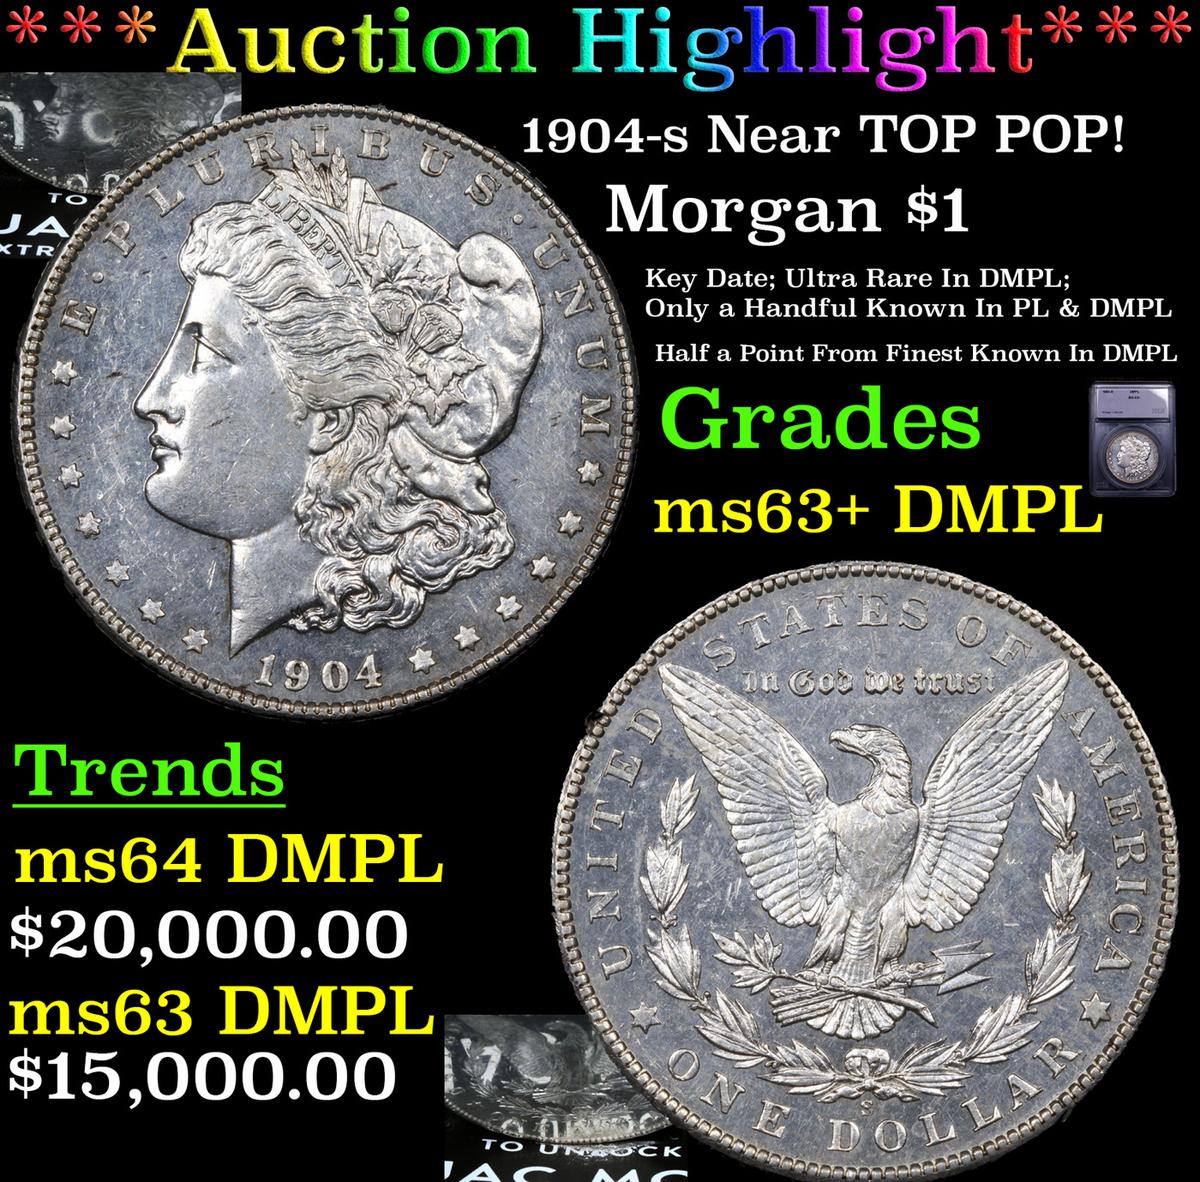 ***Auction Highlight*** 1904-s Morgan Dollar Near TOP POP! $1 Graded ms63+ DMPL By SEGS (fc)